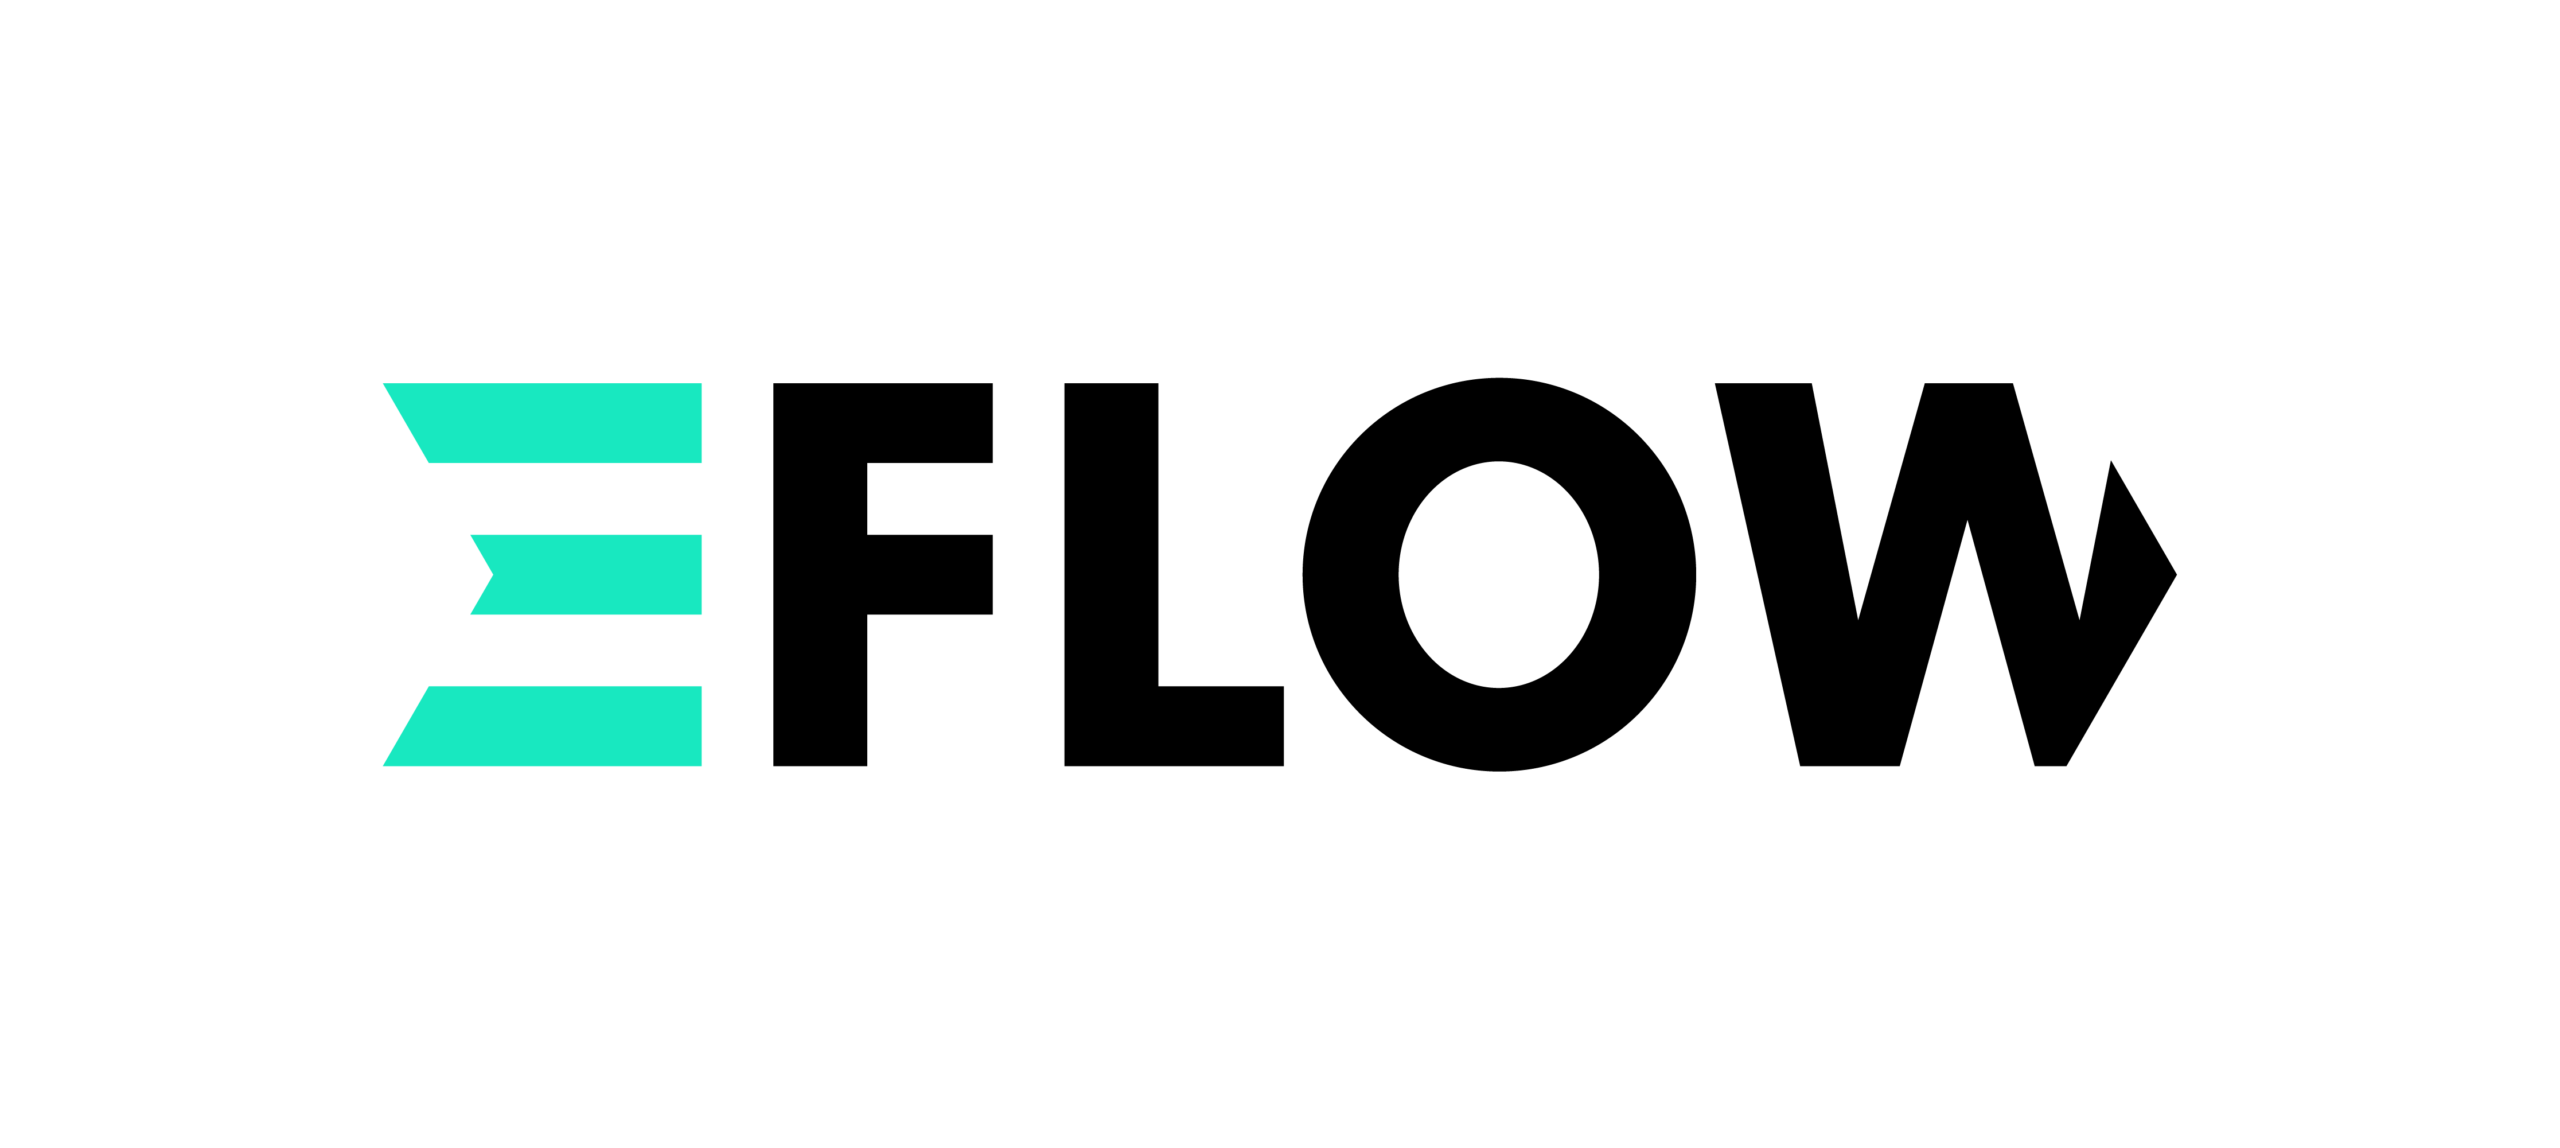 E-Flow-logo-teal black